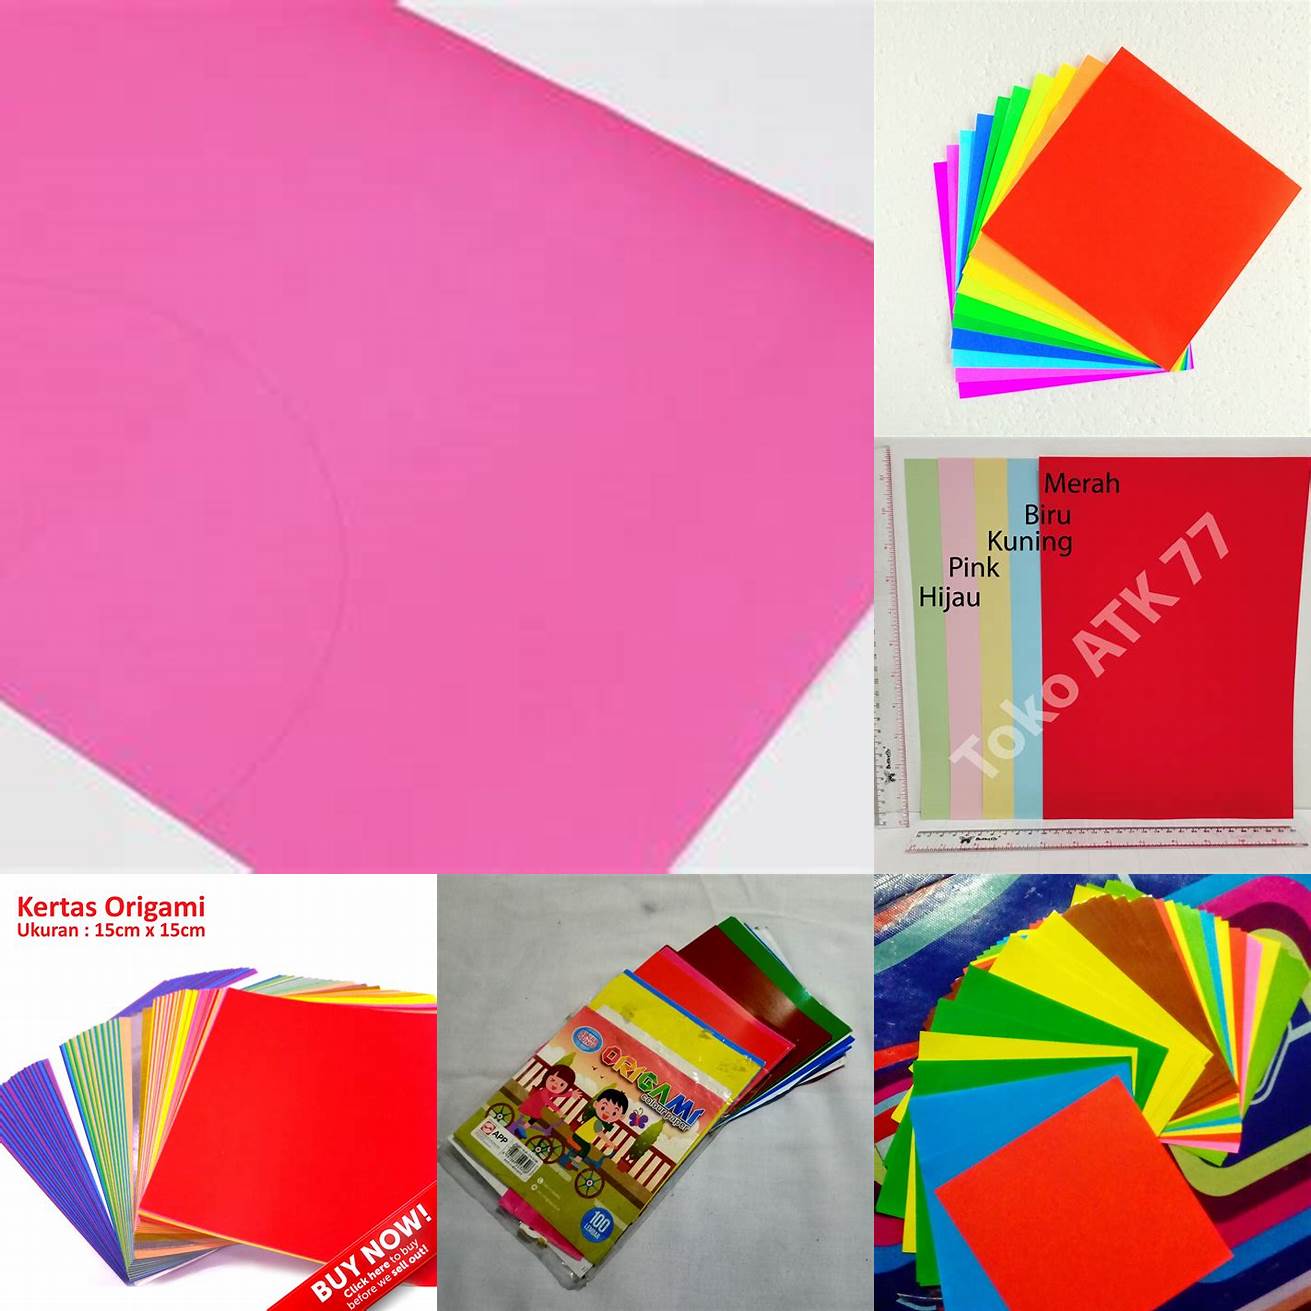 Kertas origami berwarna merah muda dengan ukuran 10x10 cm